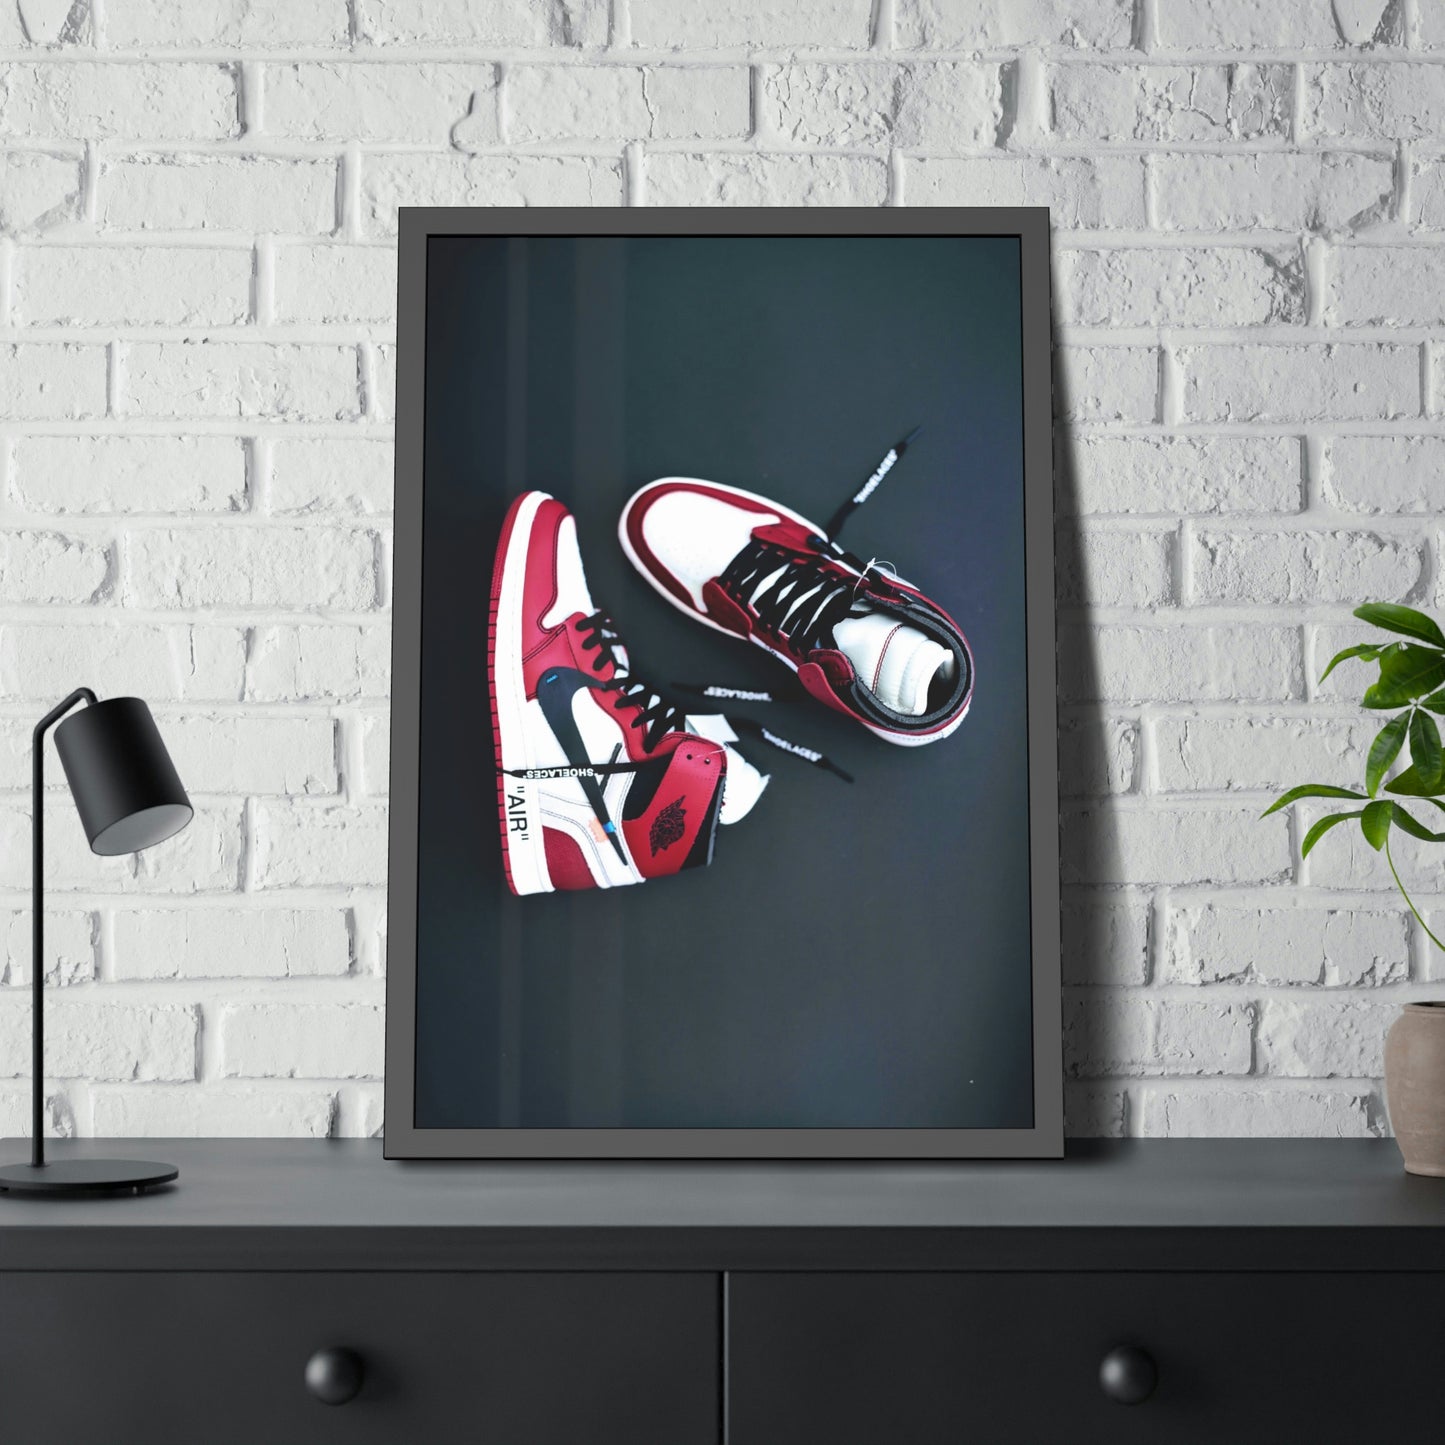 Nike "Air" Jordan